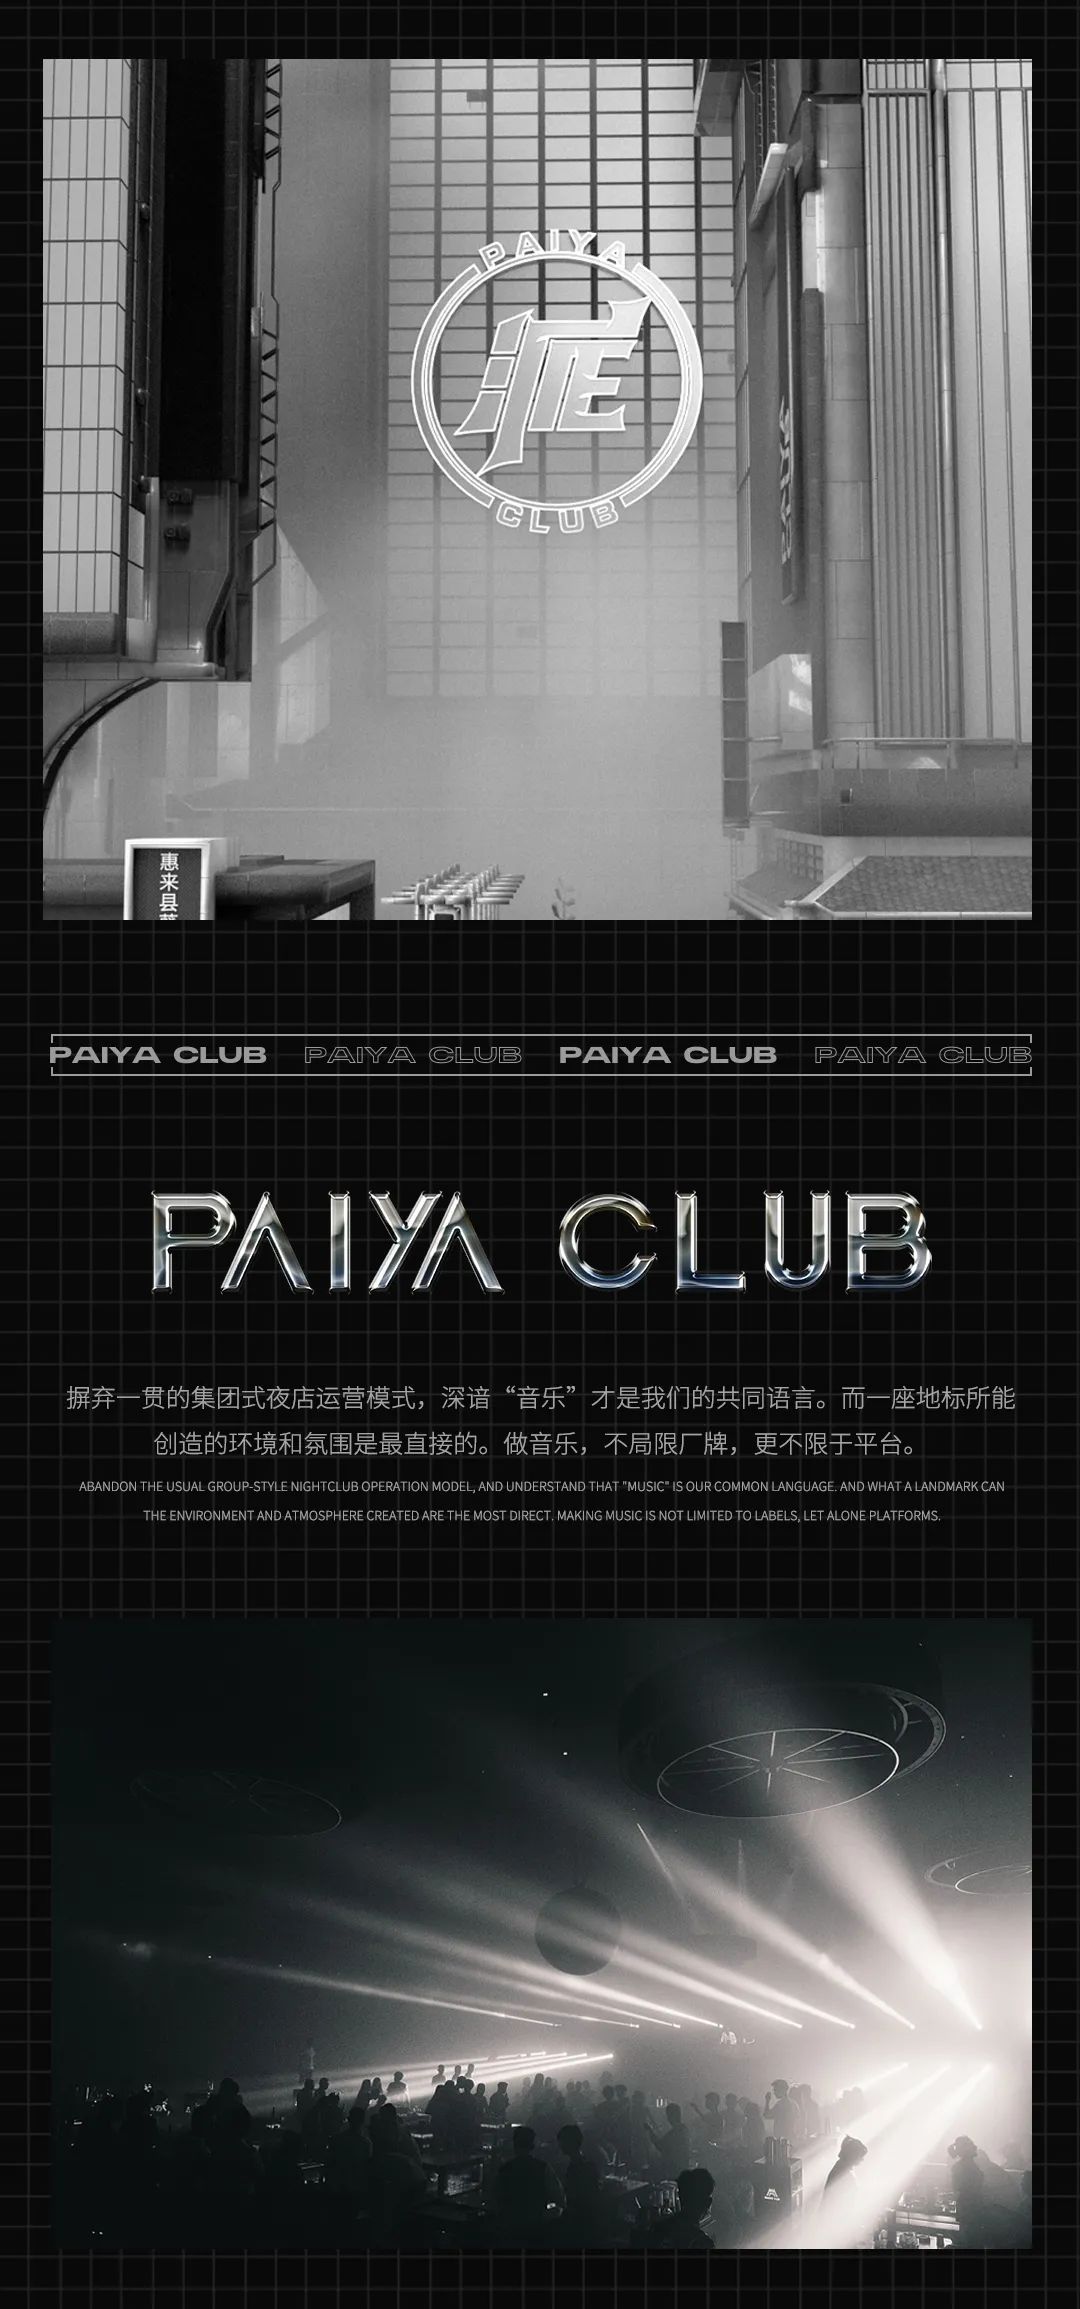 PAIYA CLUB丨匠心制造，等待只为更美好的相遇-惠来派亚酒吧/PALYA CLUB/派亚电音剧场